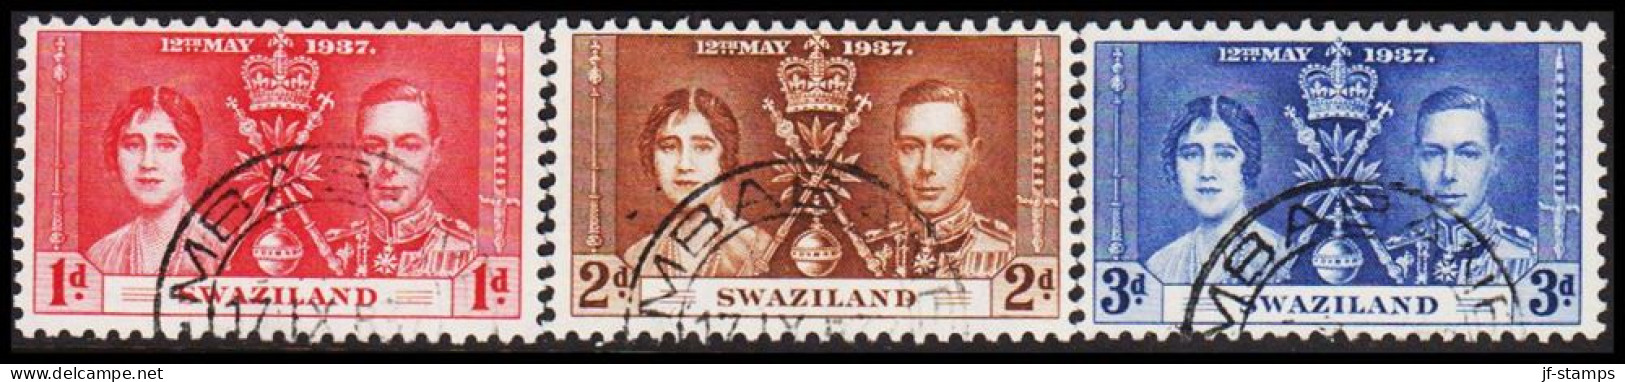 1937. SWAZILAND. Georg VI Coronation Complete Set. (MICHEL 24-26) - JF537478 - Swaziland (...-1967)